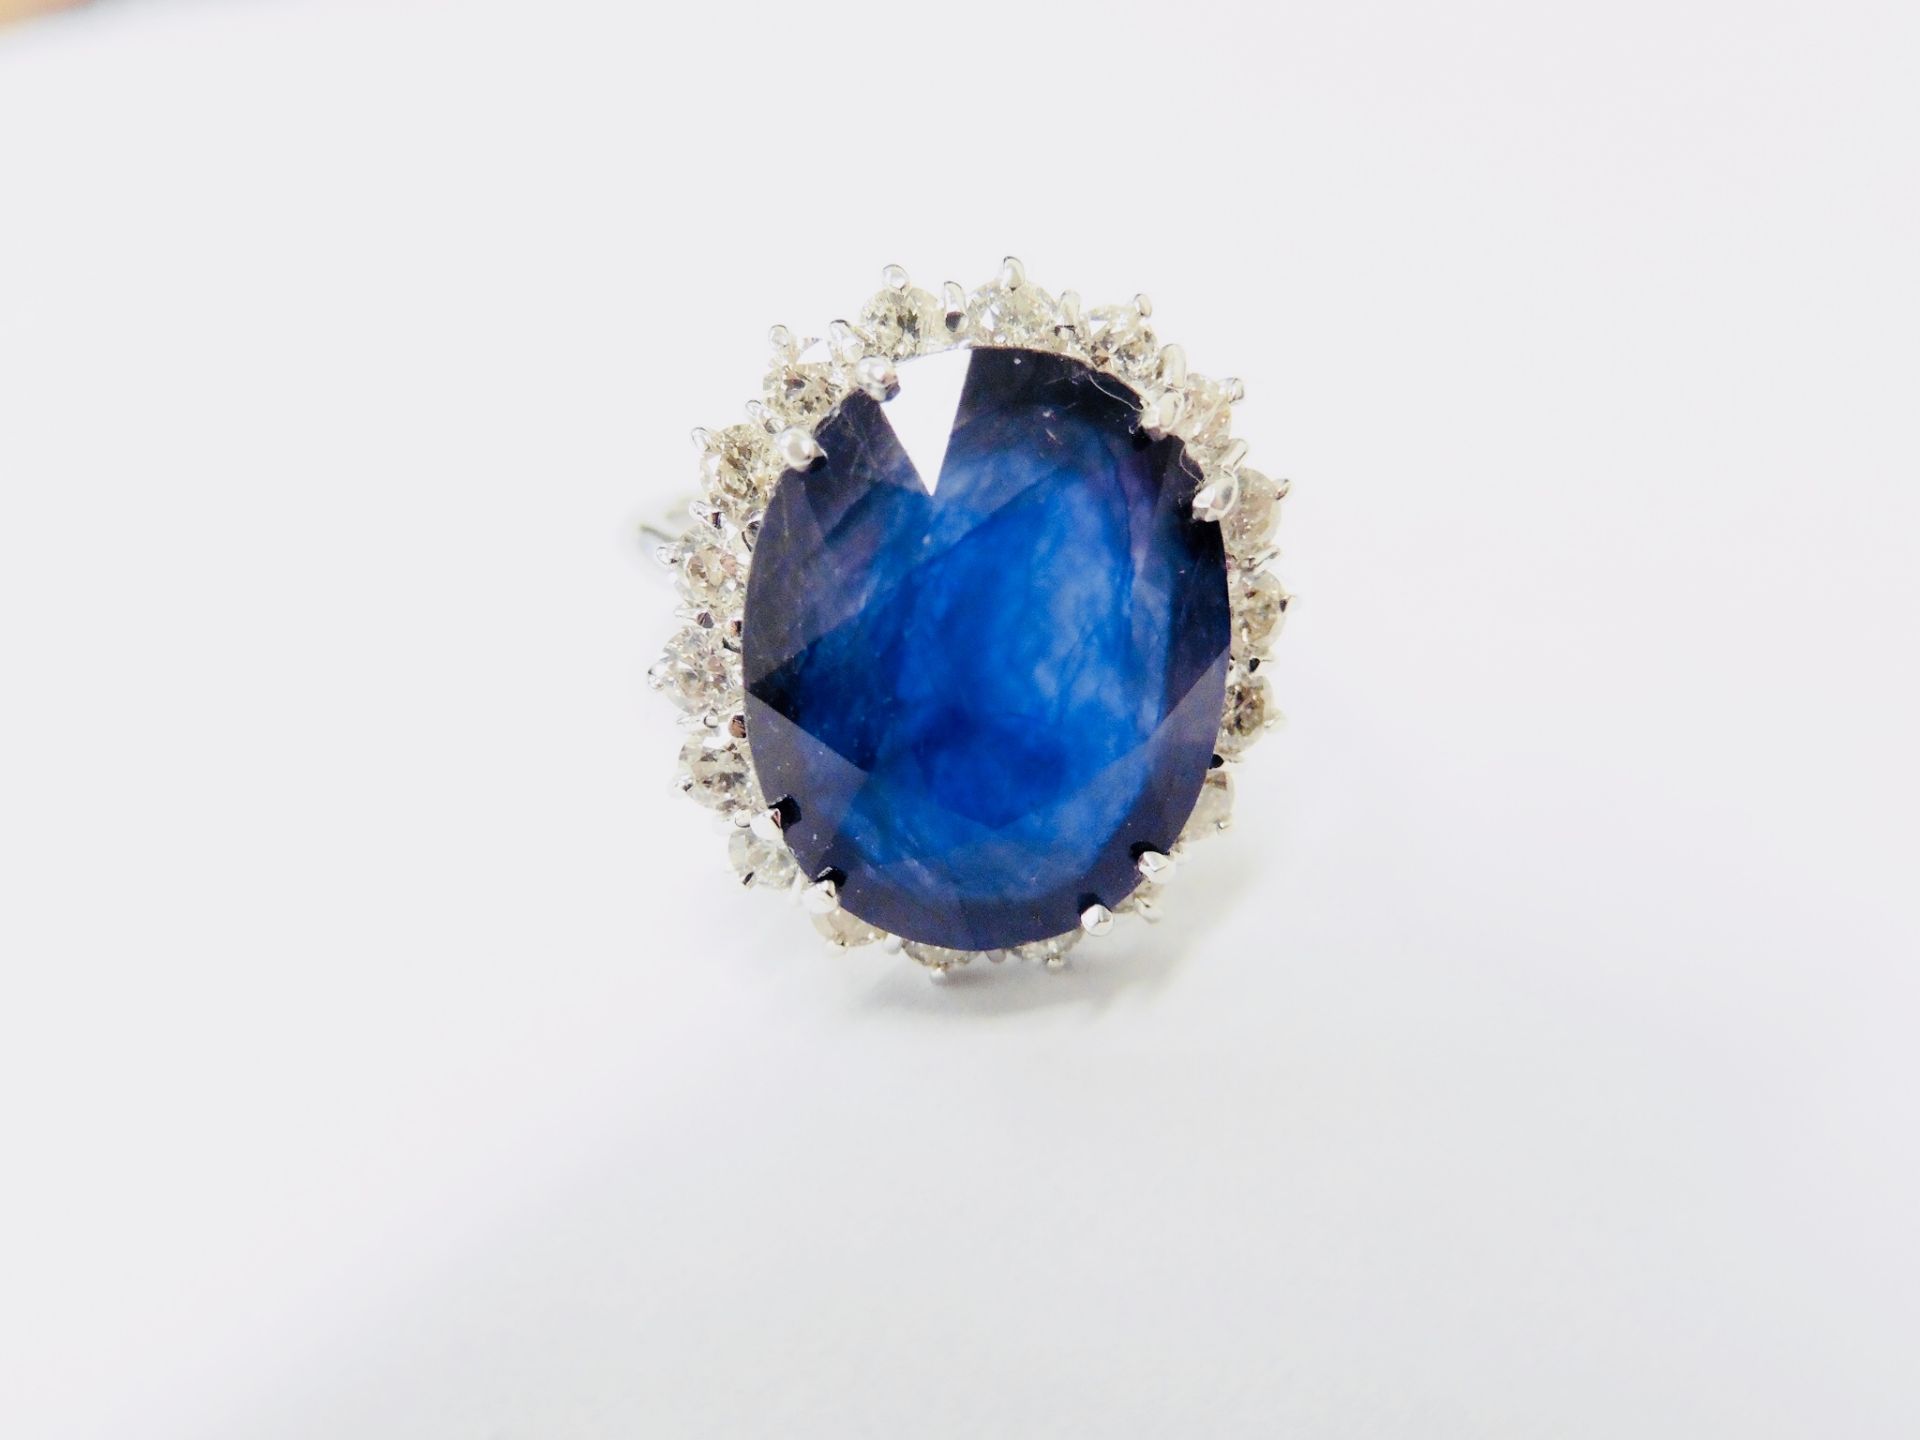 9ct Sapphire Diamond cluster ring,9ct sapphire natural(treated),1.30ct brilliant cut diamonds si2